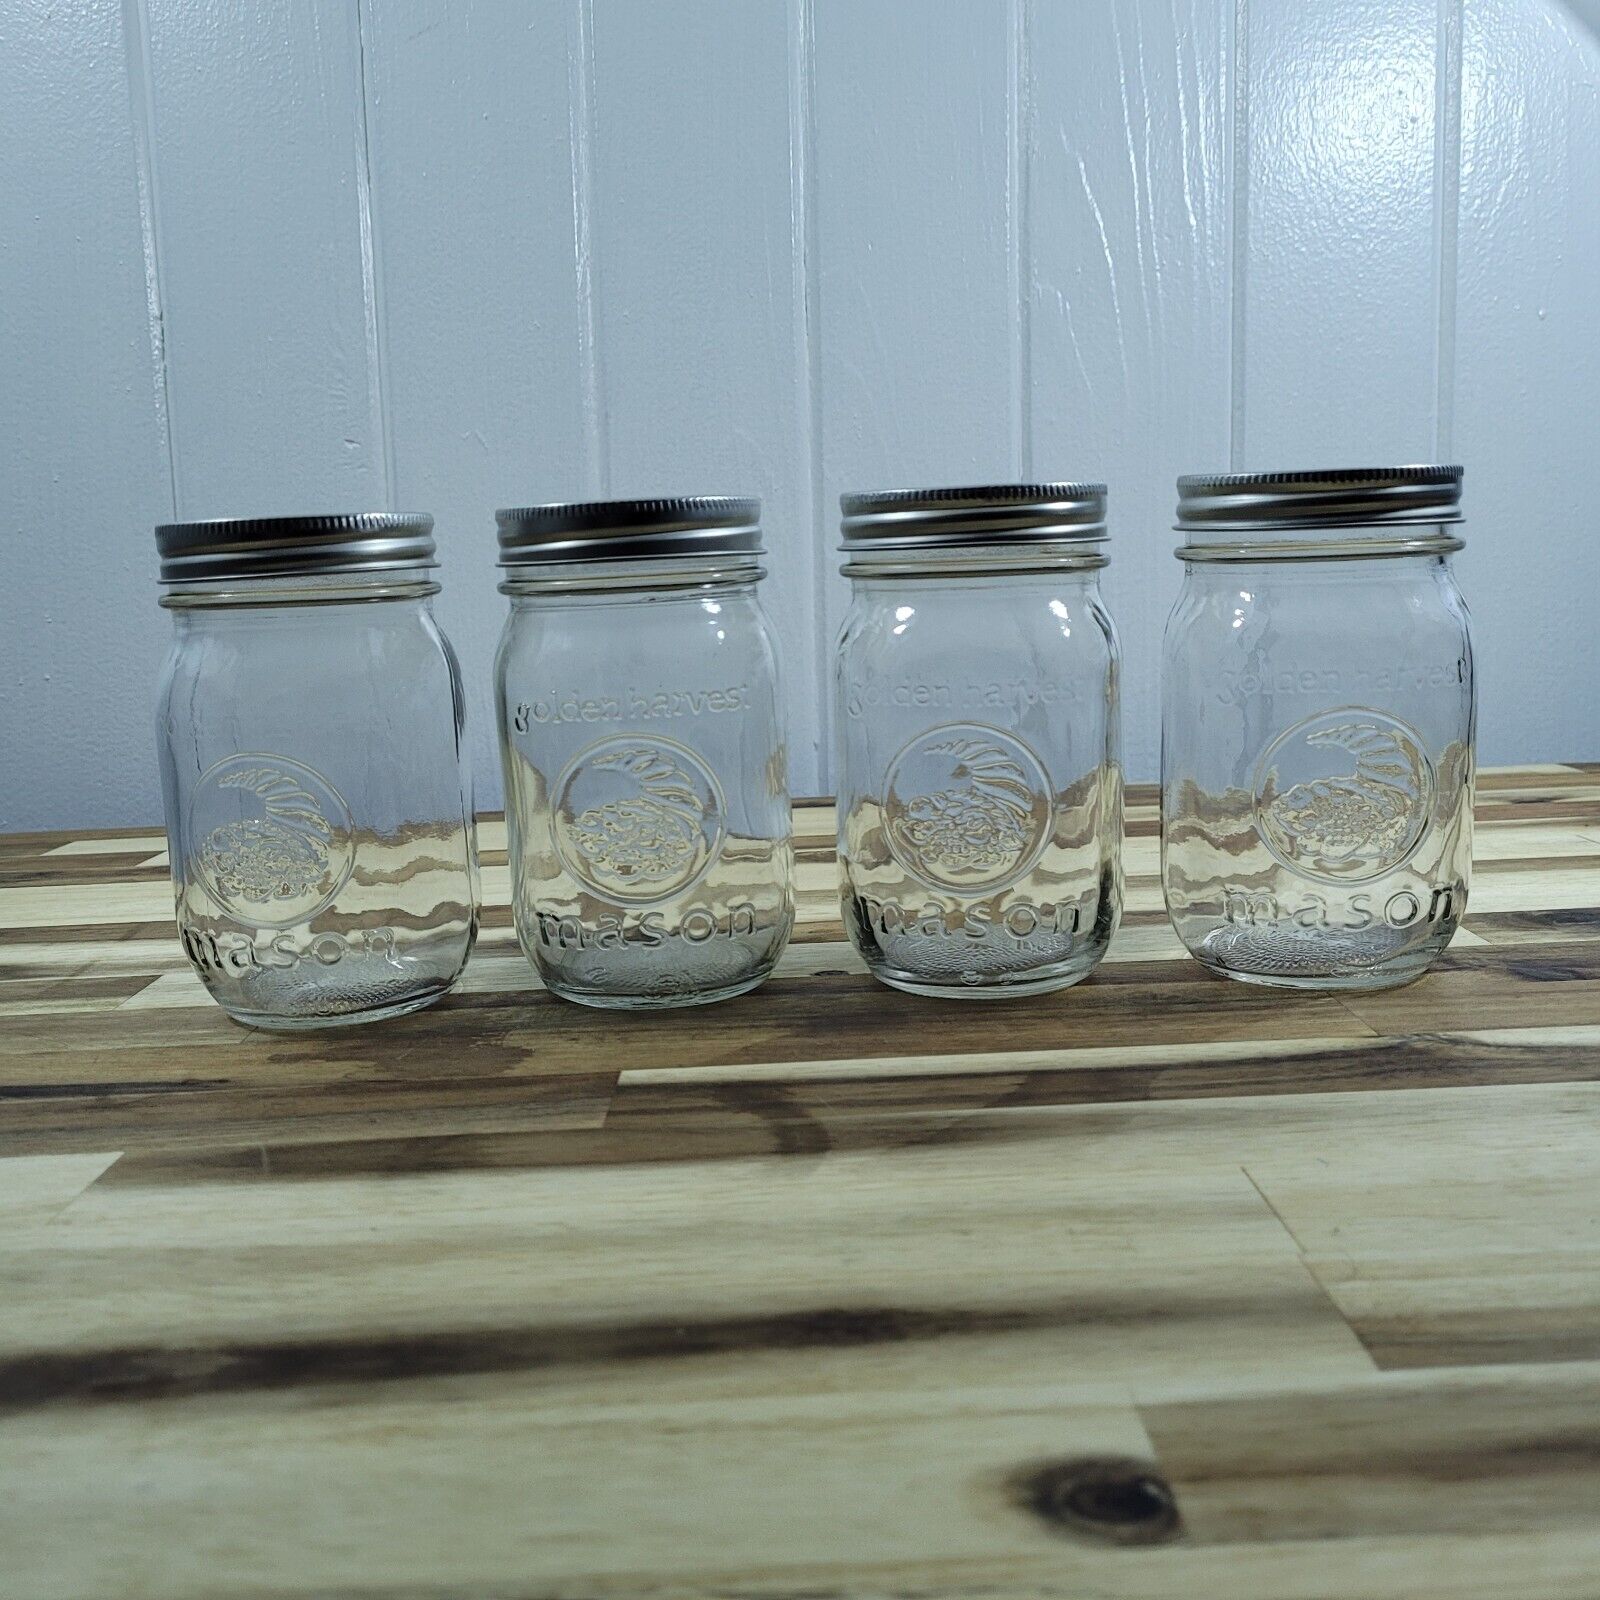 Lot of 4 Vintage Anchor Hocking Golden Harvest Mason Pint Glass Canning Jars